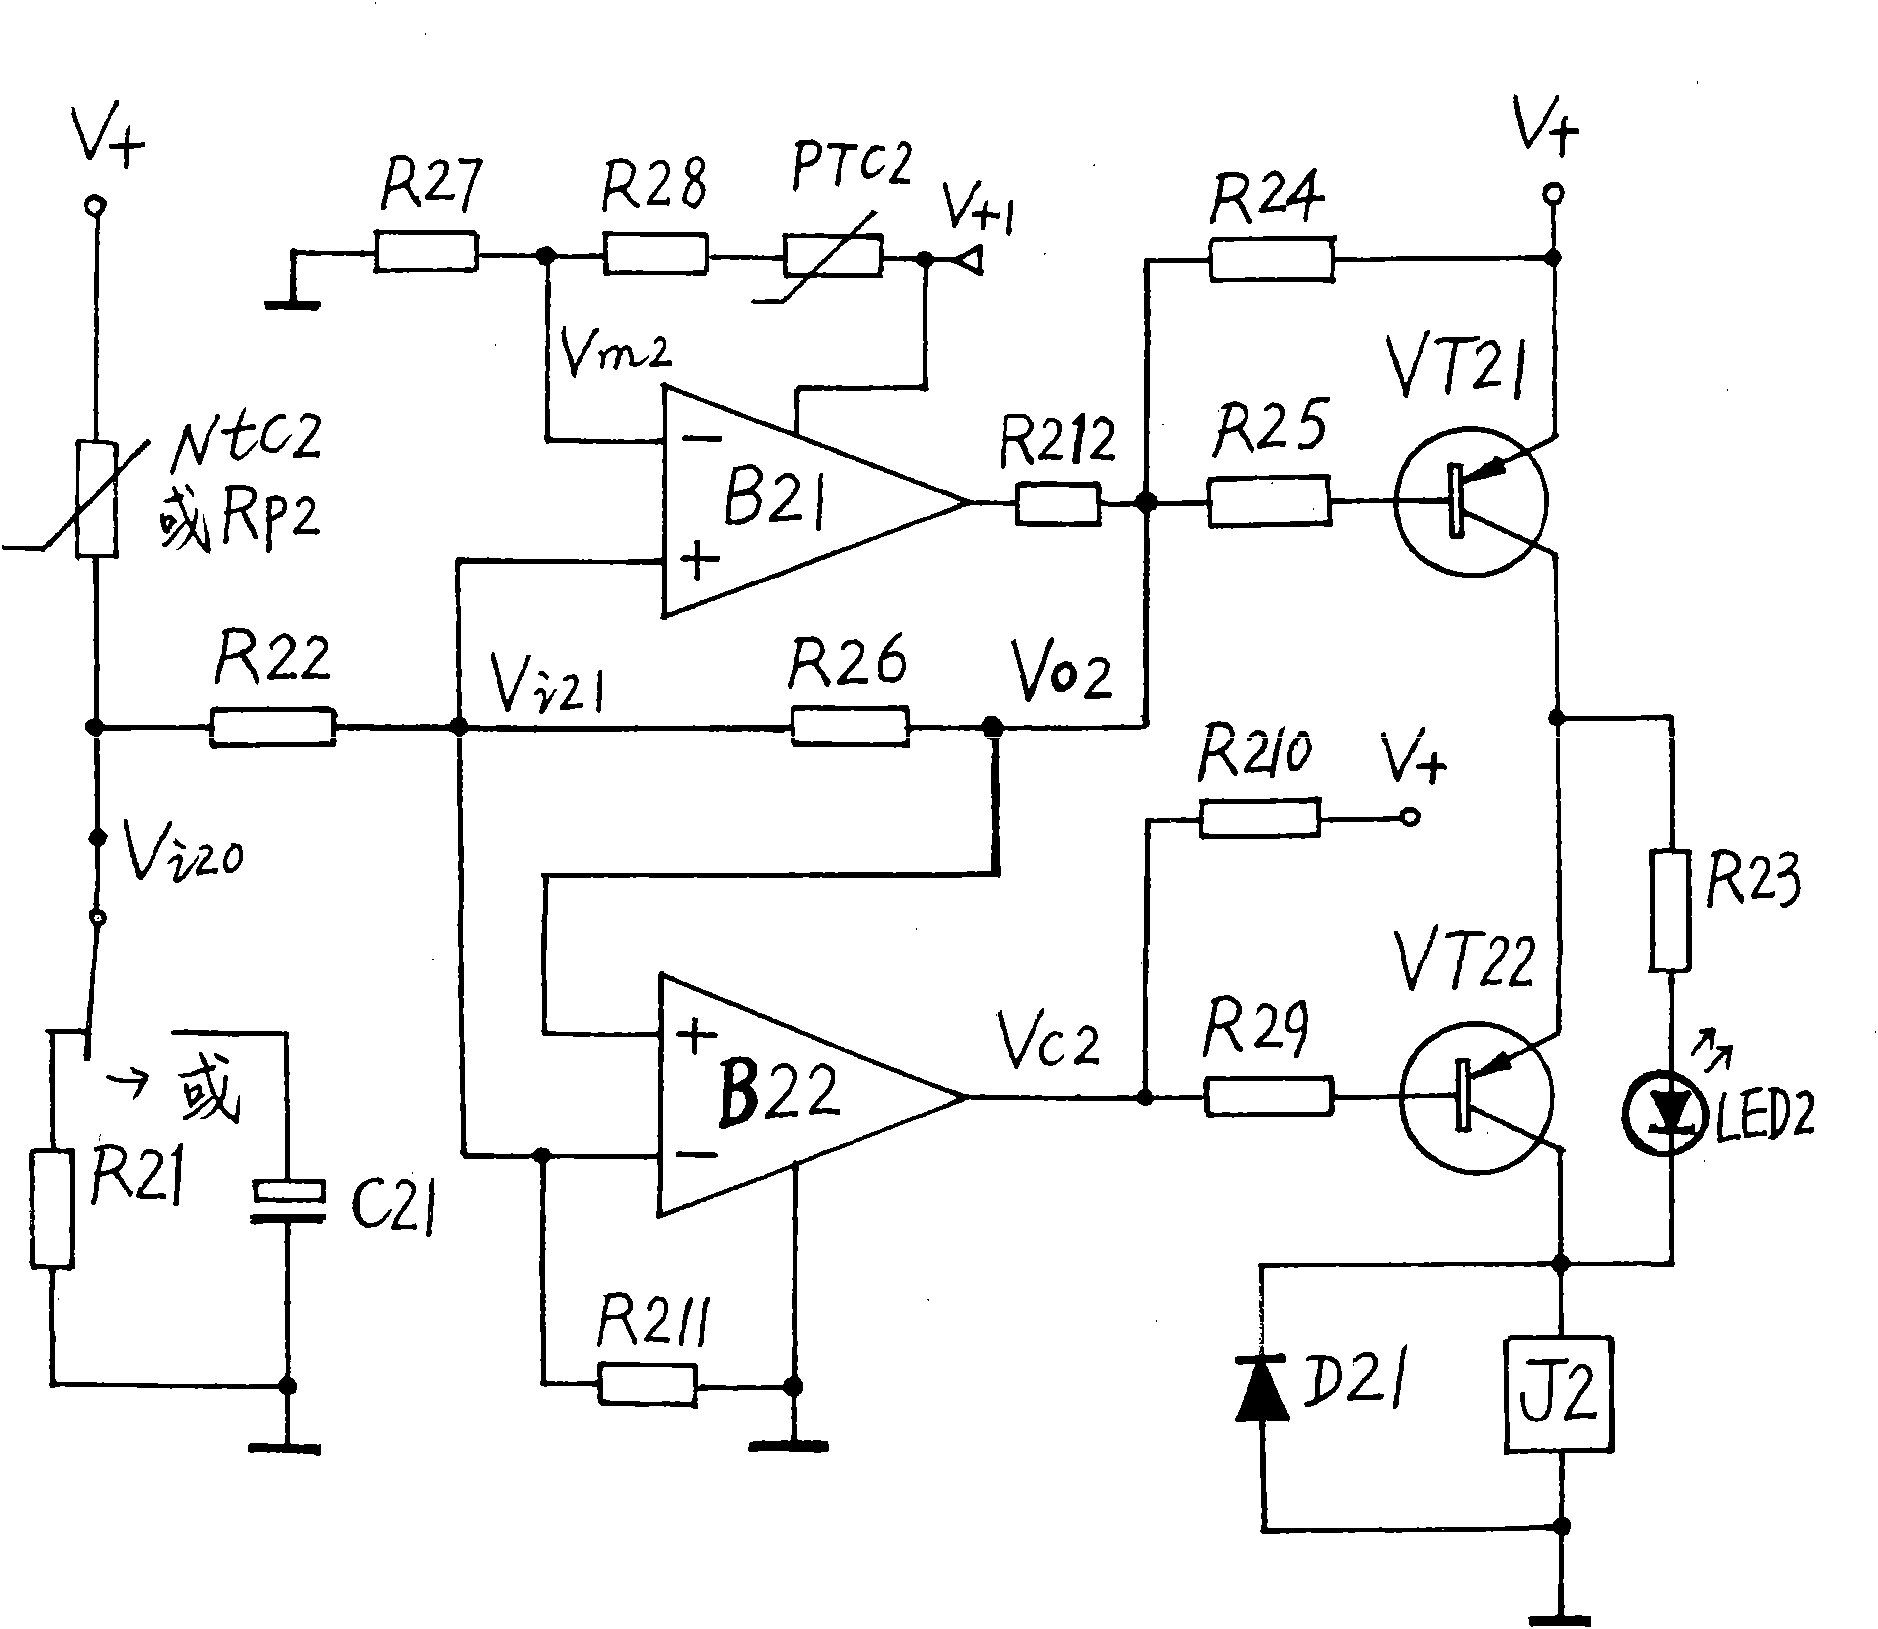 Safe control time-base circuit